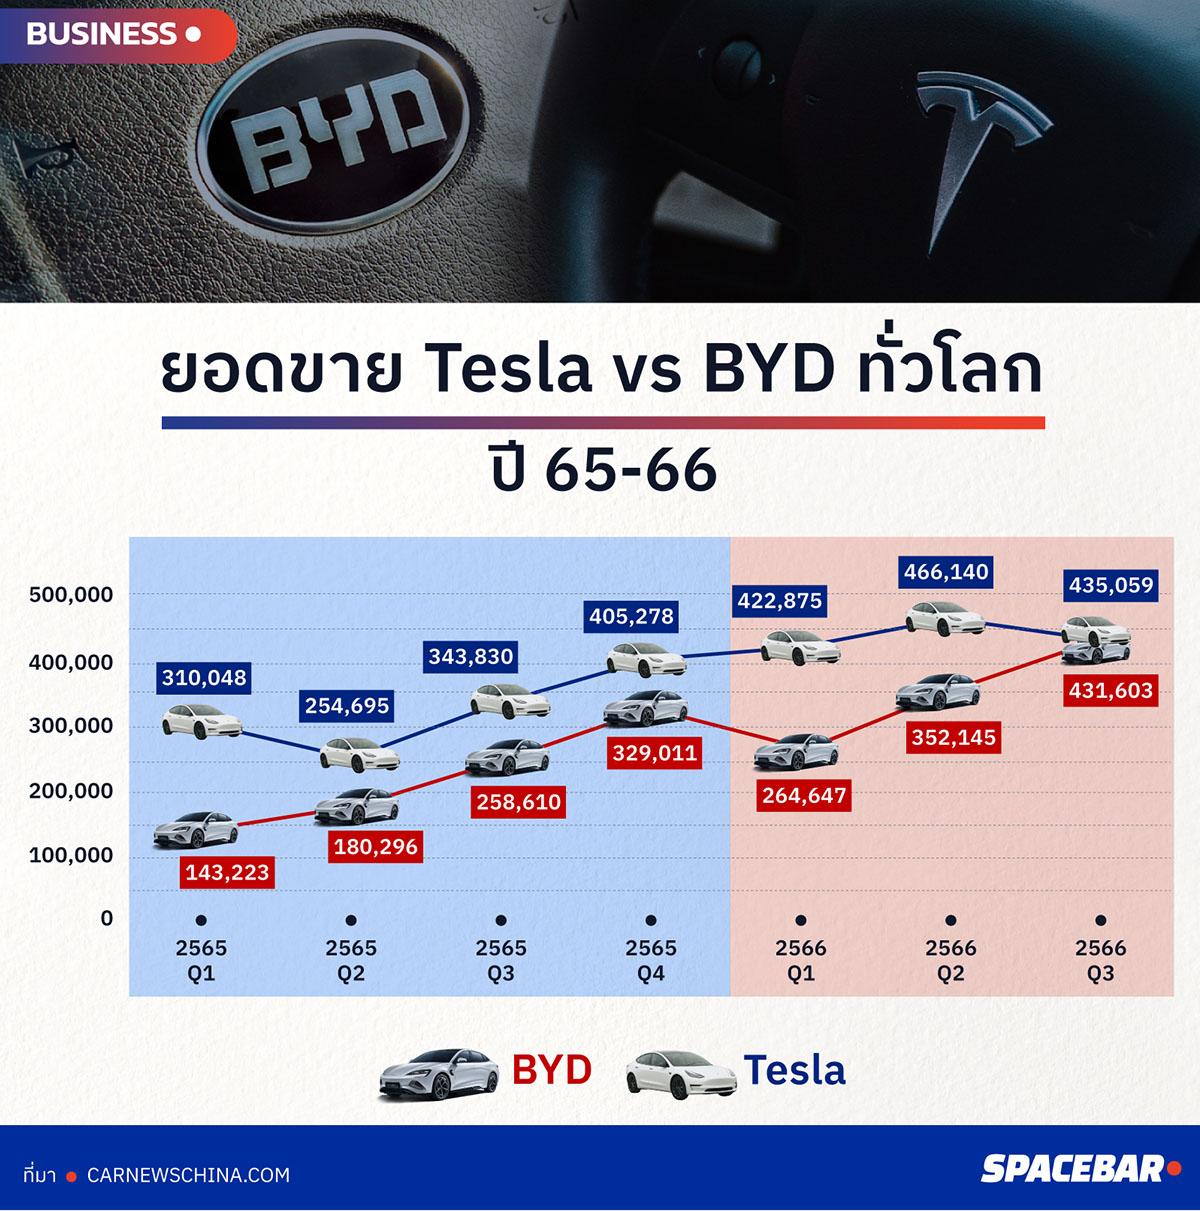 EV, รถยนต์ไฟฟ้า, รถ EV, อีวี, ไฟฟ้า, พลังงานไฟฟ้า, Tesla, เทสล่า, ดิสรัปชั่น, Disrupt, BYD, Benz, BMW, อีลอน มัสก์, Elon Musk, หวัง ชวนฟู, Wang Chuanfu, Ford Model T